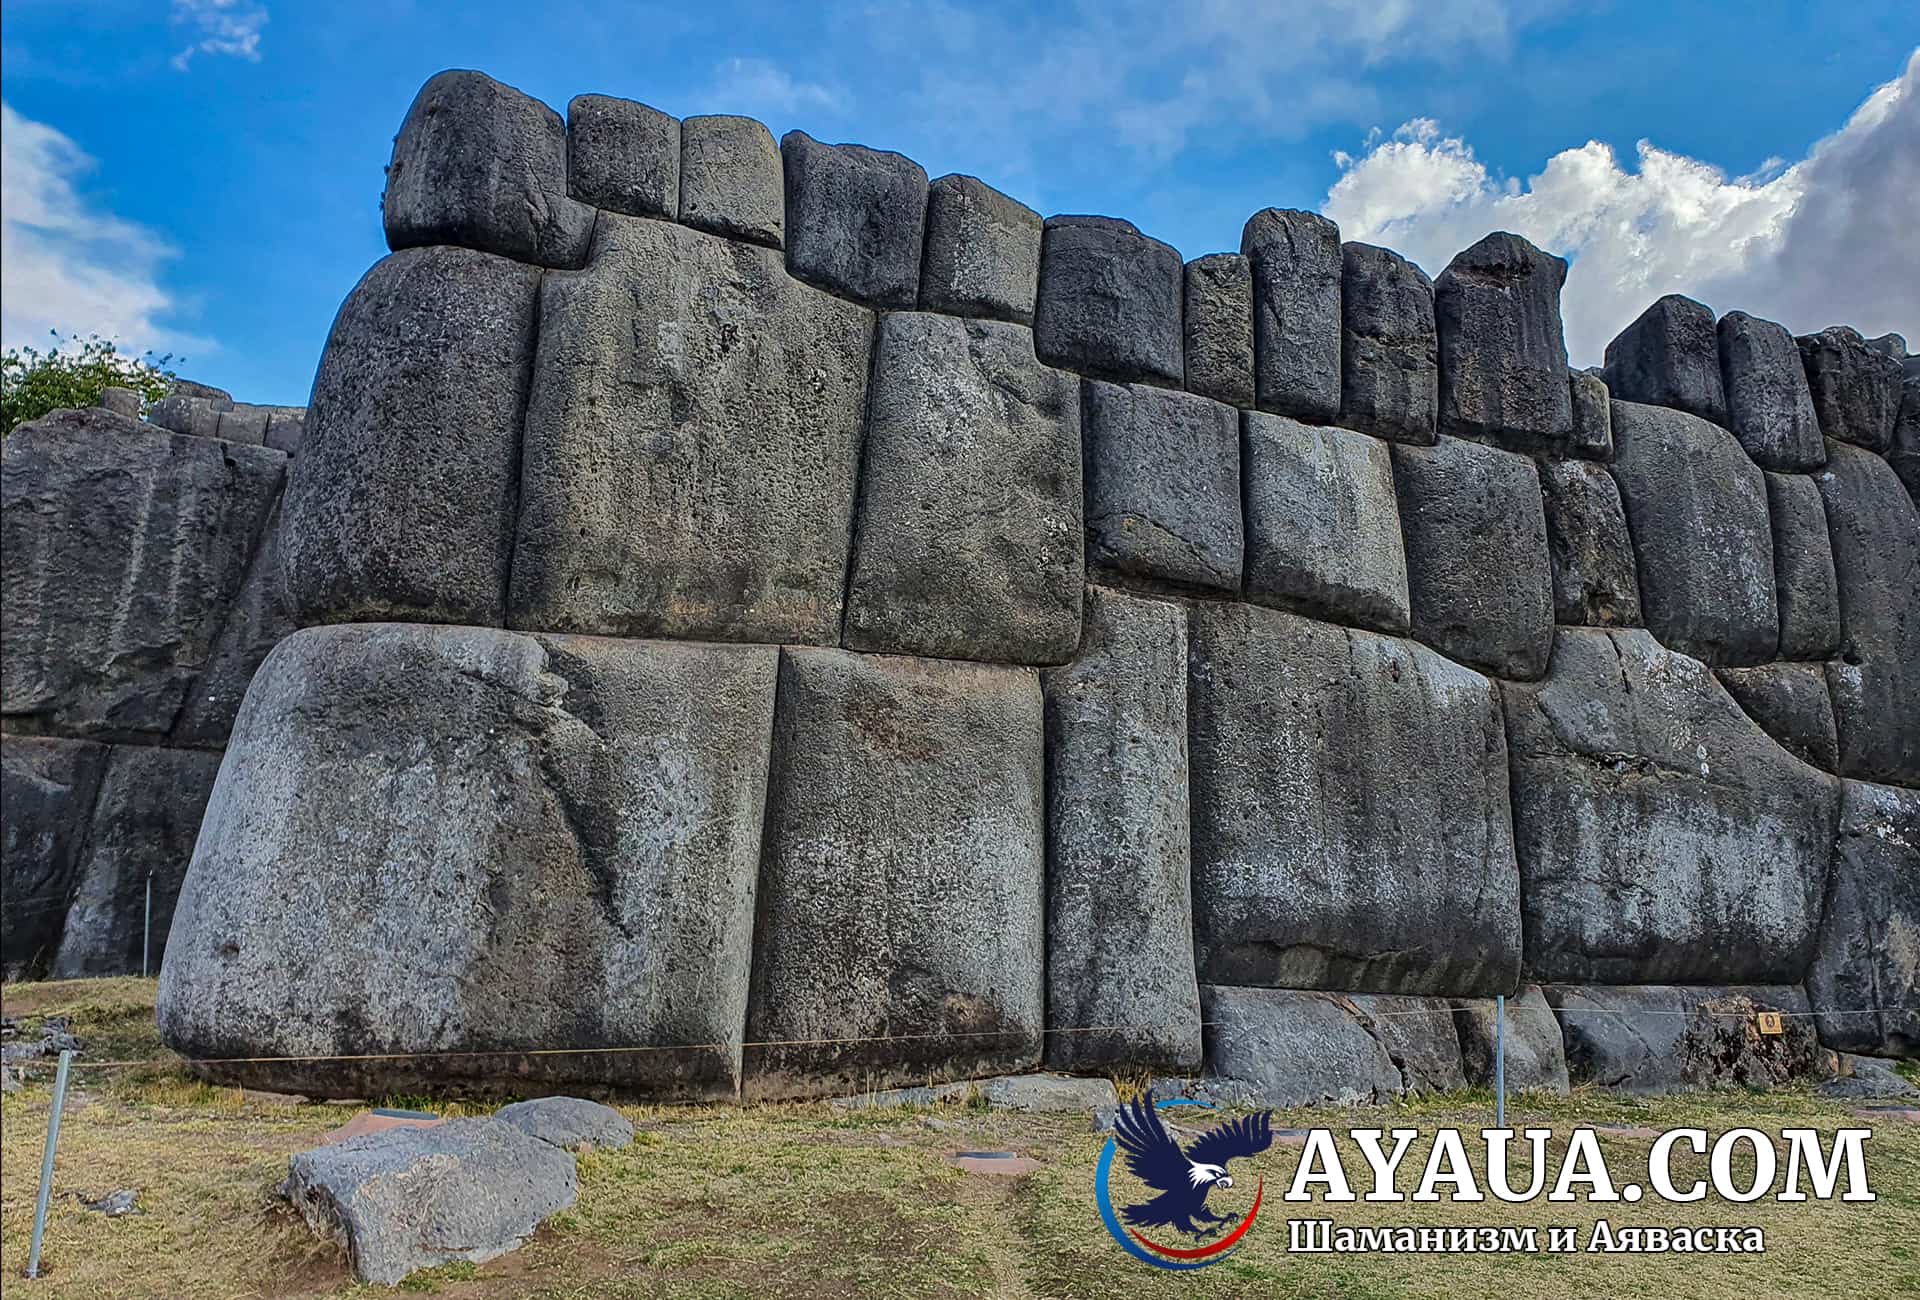 Saksaywaman (Saksaywaman) – ancient structures near Cusco in Peru